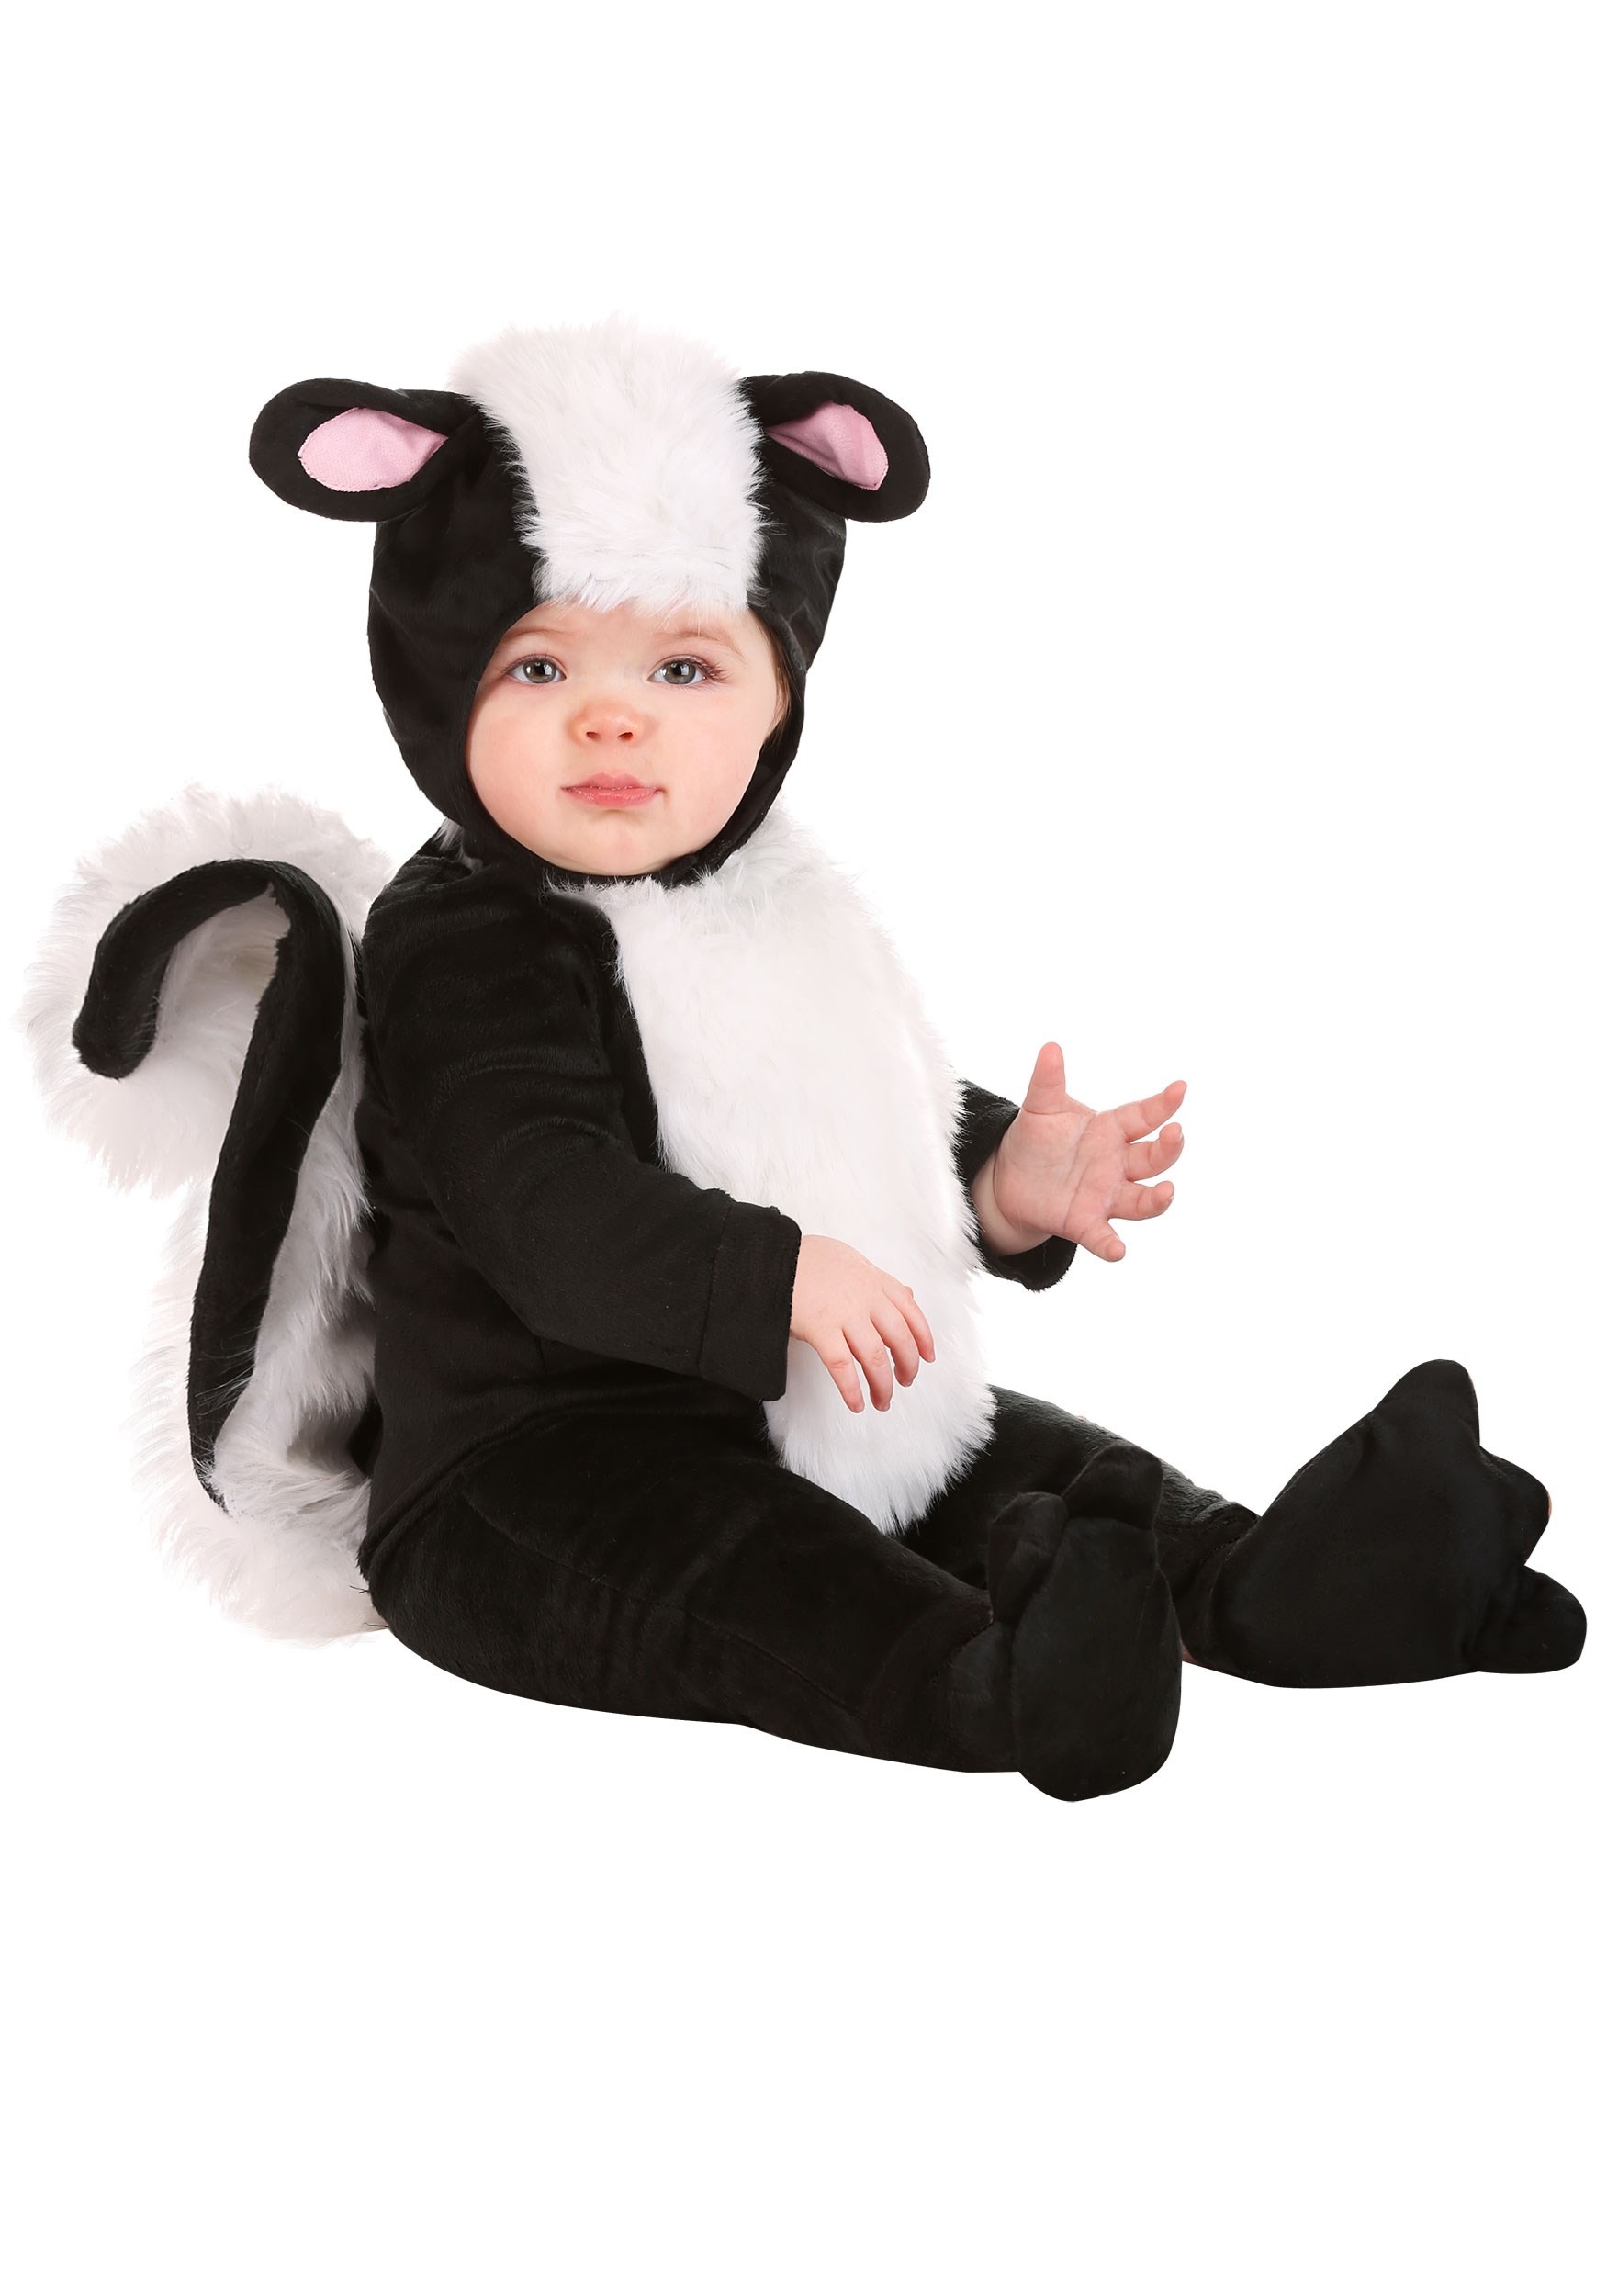 Photos - Fancy Dress FUN Costumes Skunk Infant Costume Black/White FUN0575IN